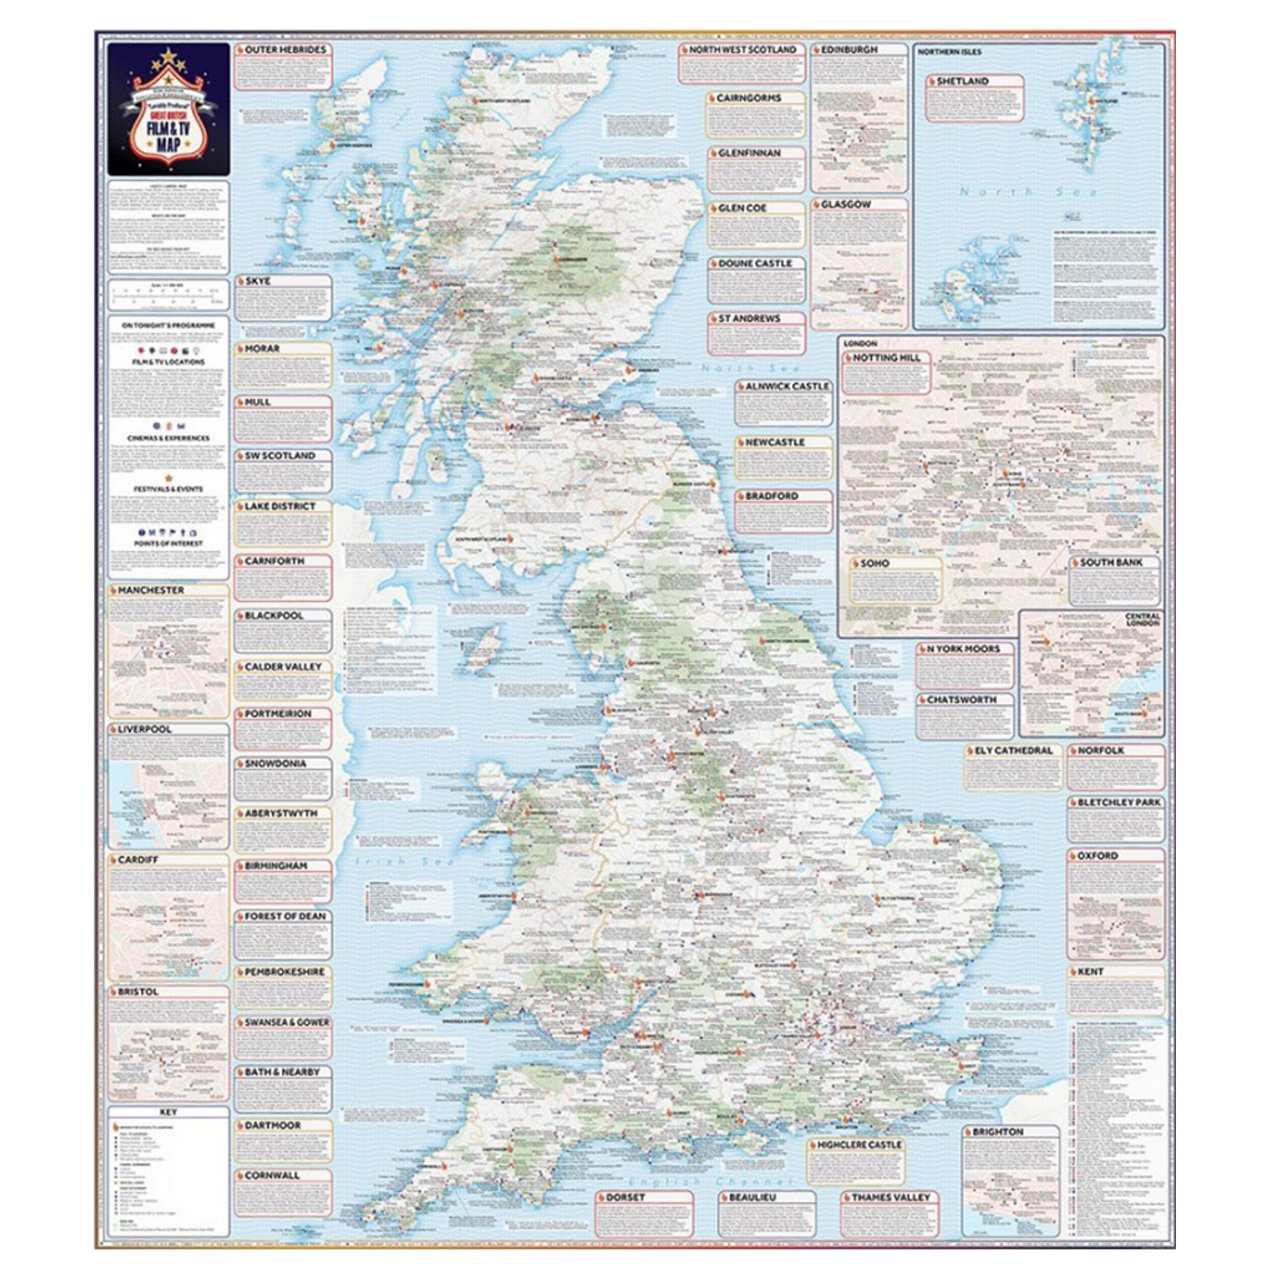 St&gs Great British FilmandTv Map